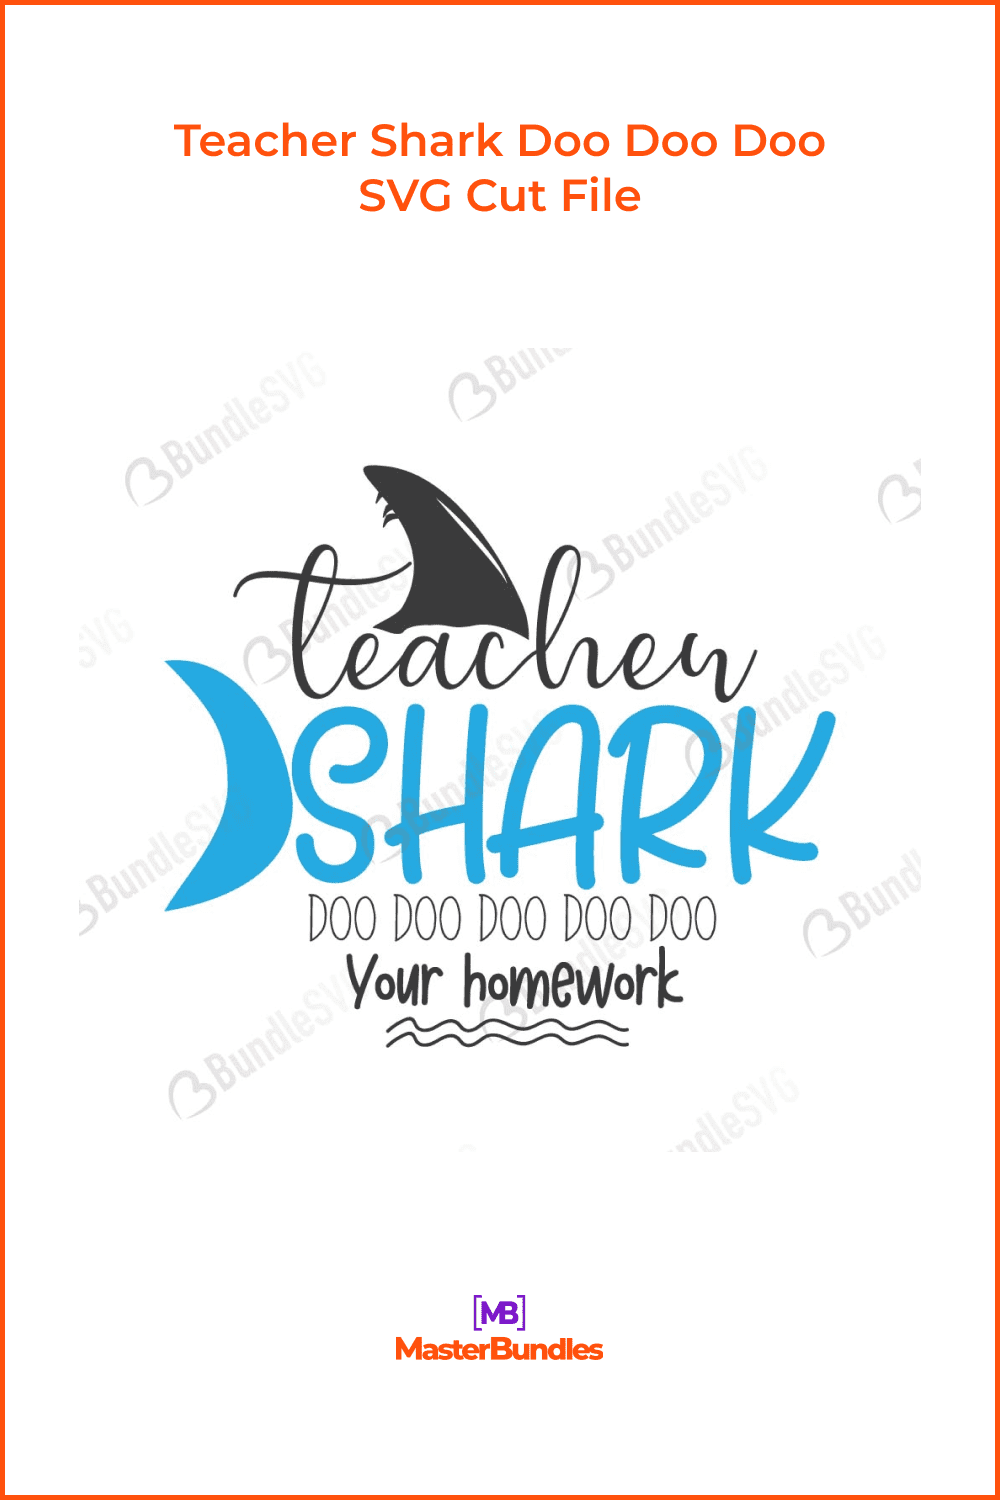 Teacher Shark Doo Doo Doo SVG Cut File.